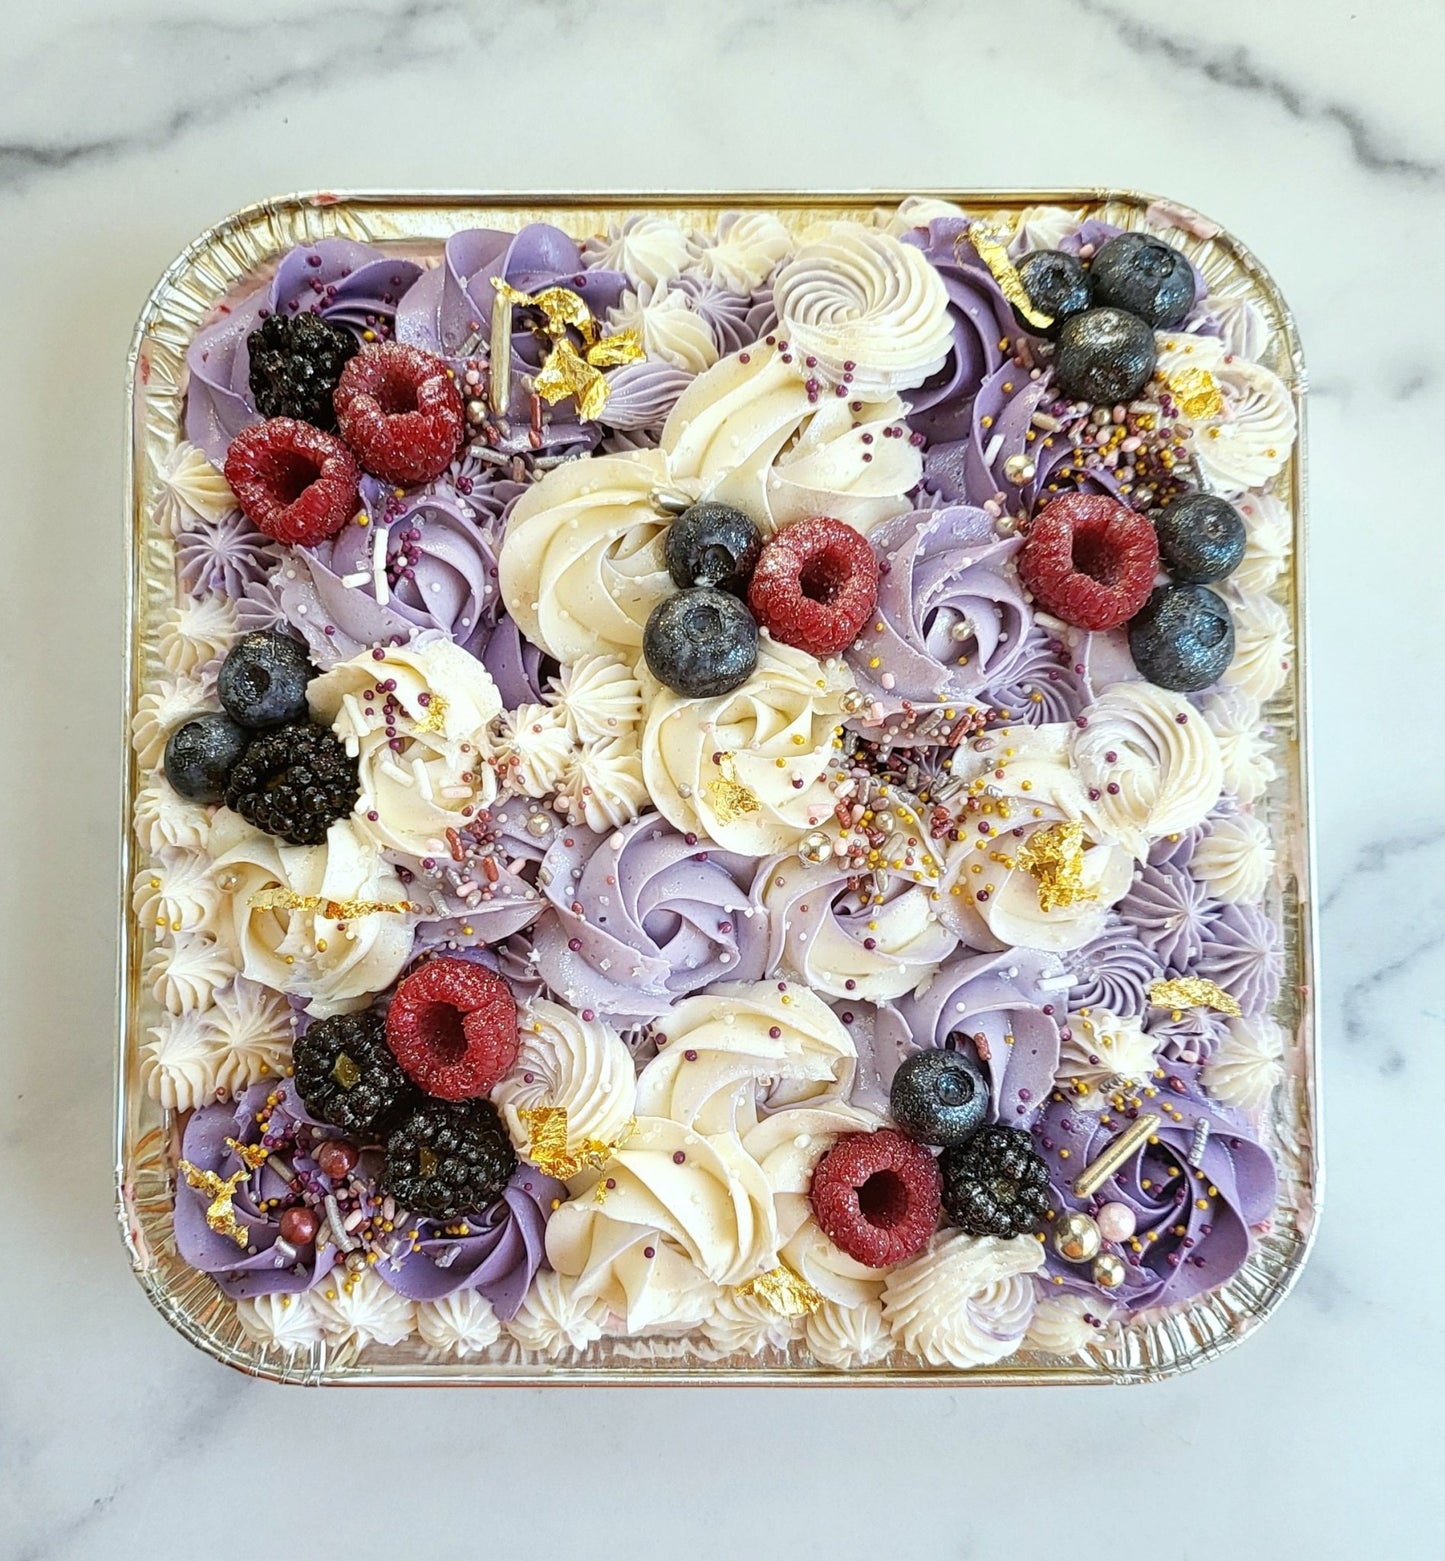 Gourmet Tray Cakes - Elegant Impressions Bakery